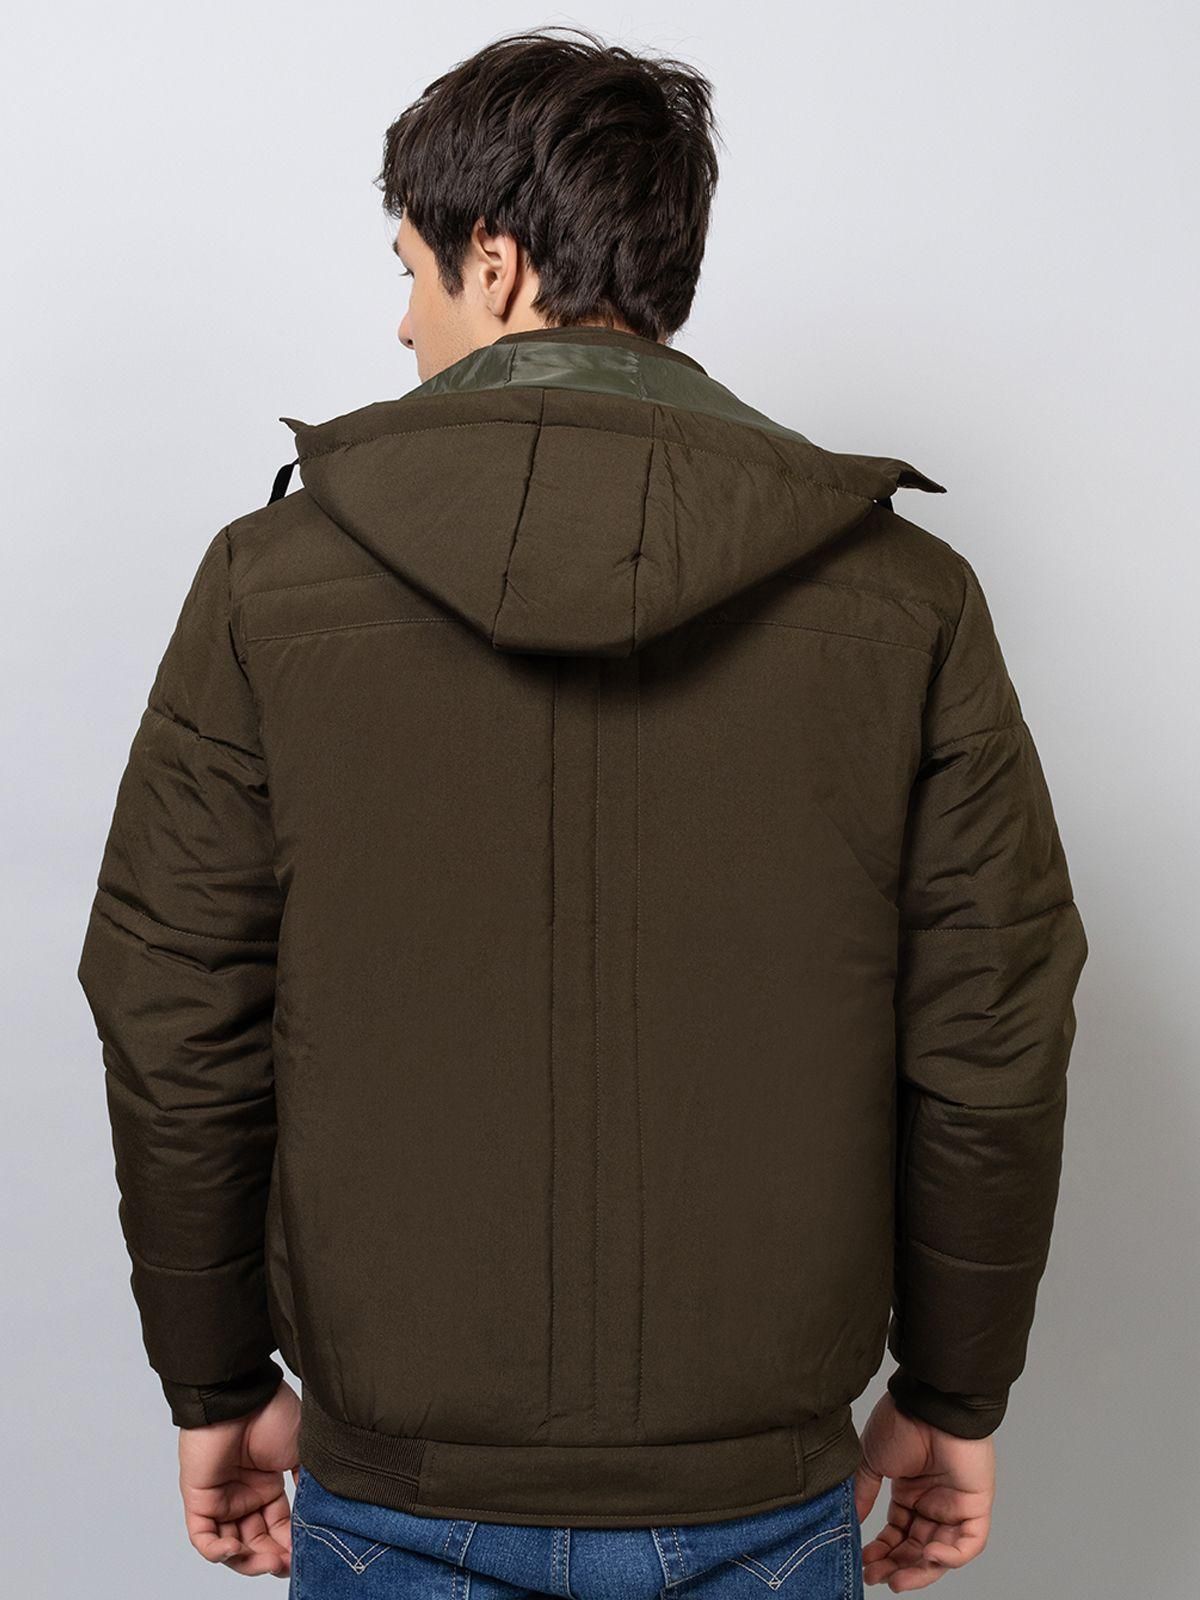 Xohy Men's Full Sleeve Bomber Hooded Olive Jacket